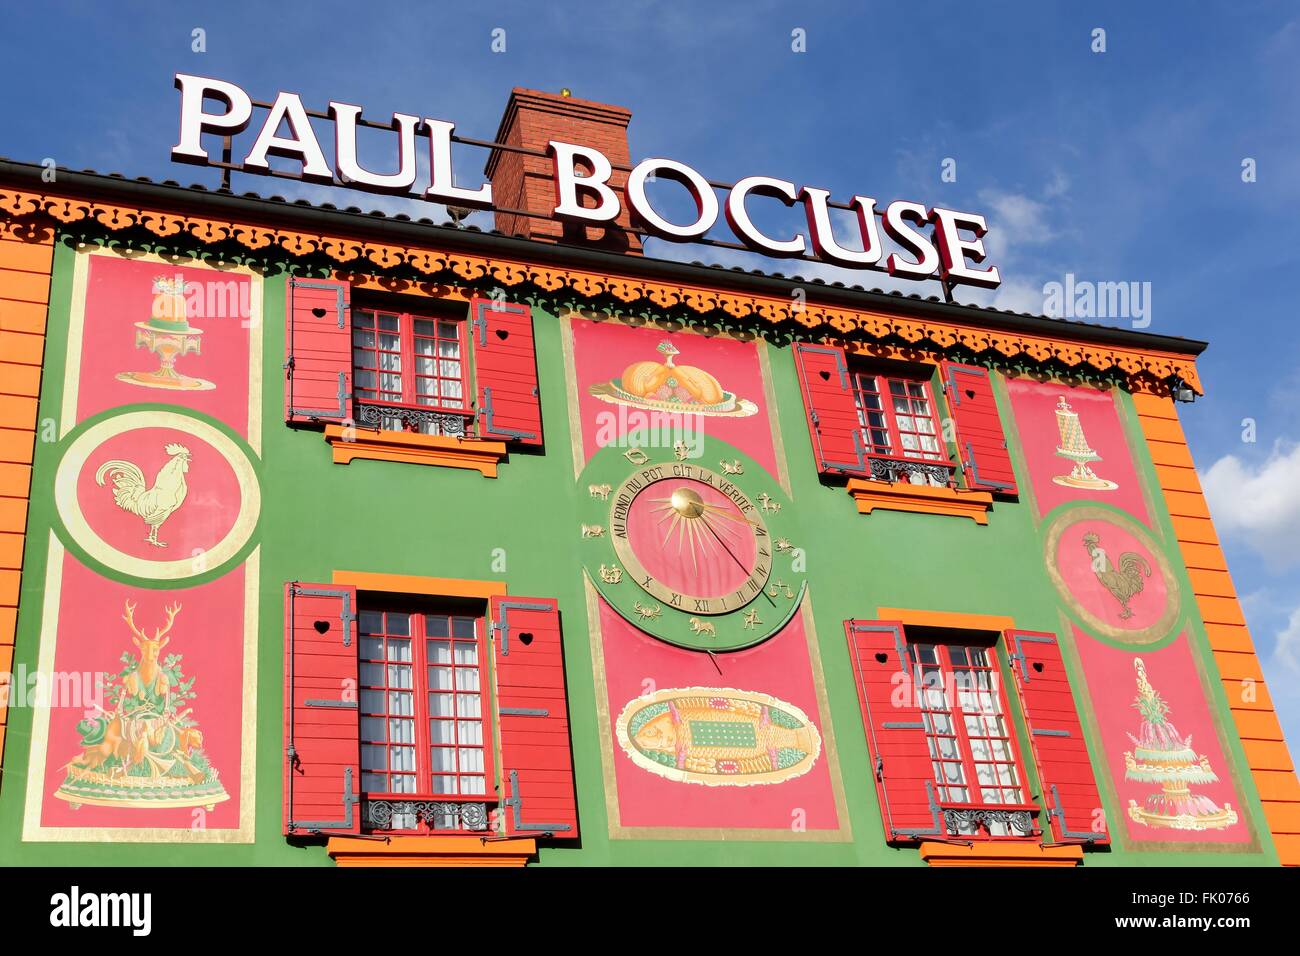 Facade of the restaurant Paul Bocuse in Lyon, France Stock Photo